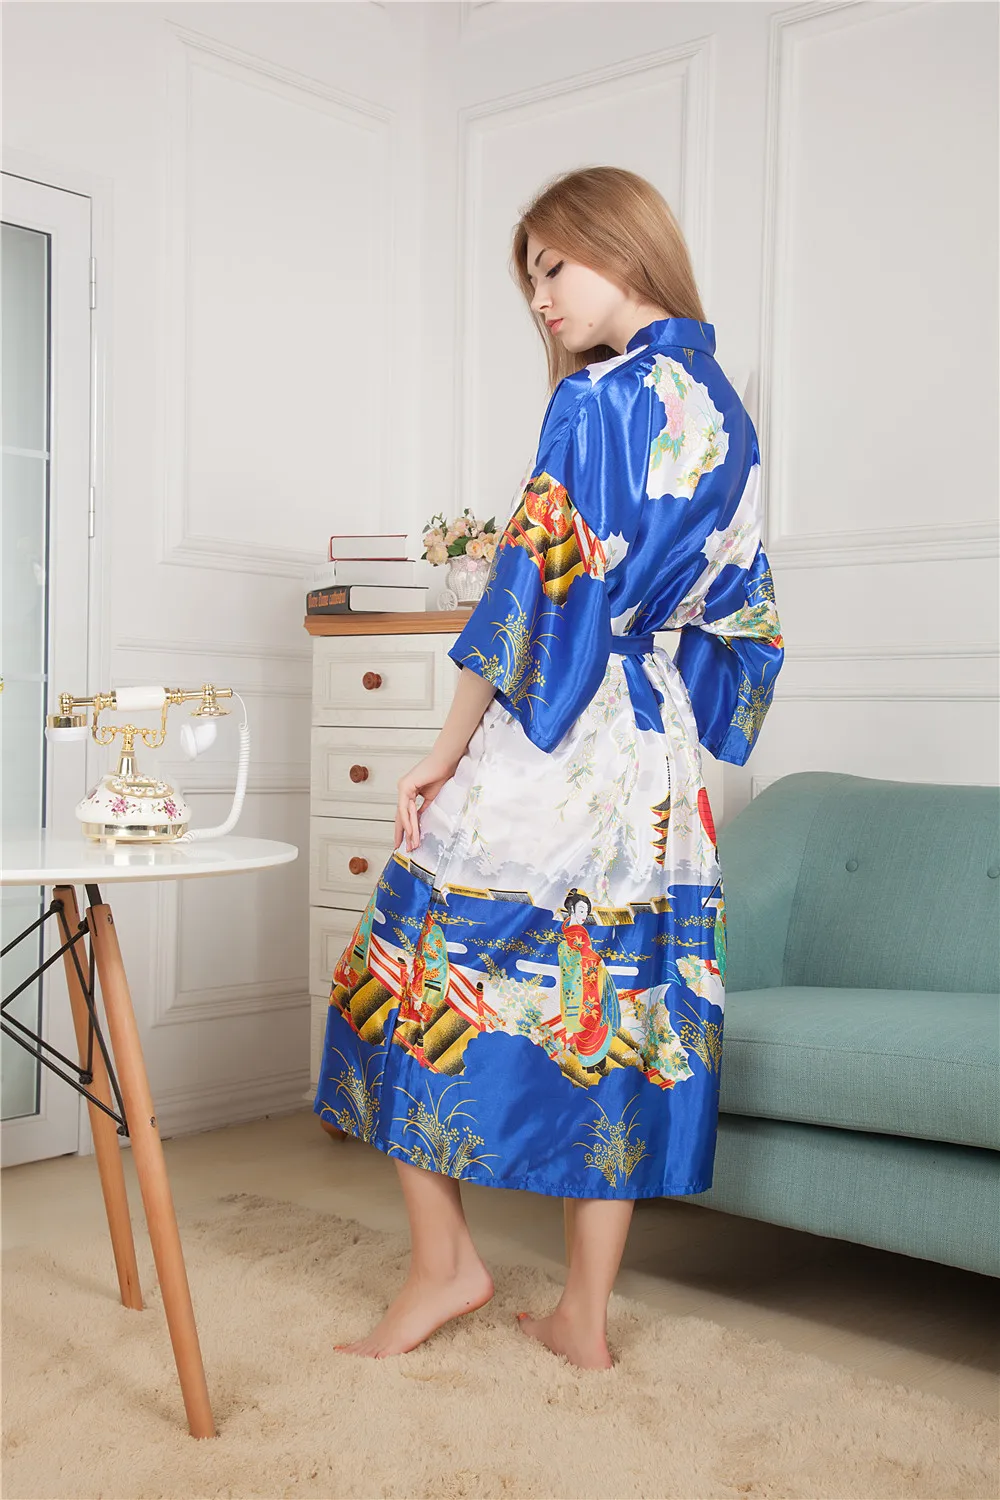 Nyhed Trykt Lang Stil Kvinders Kimono Kjole Vintage Trykt Natkjole Morgenkåbe Satin Nattøj Slåbrok One Size M05 1